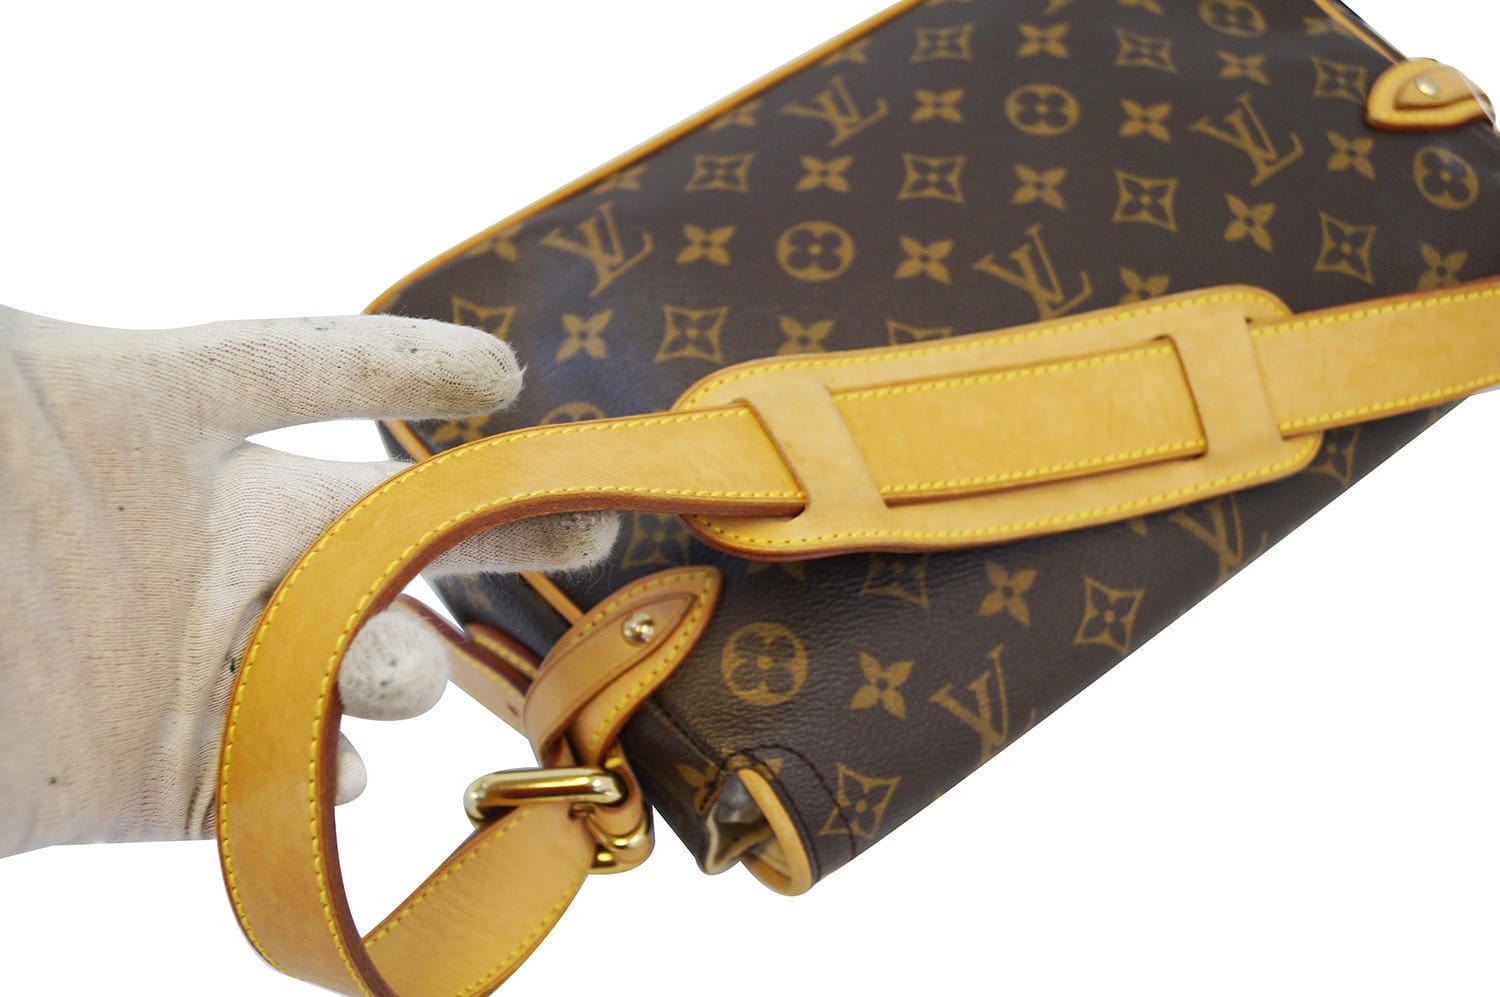 Louis Vuitton Hudson Pm Shoulder Bag At Jill's Consignment